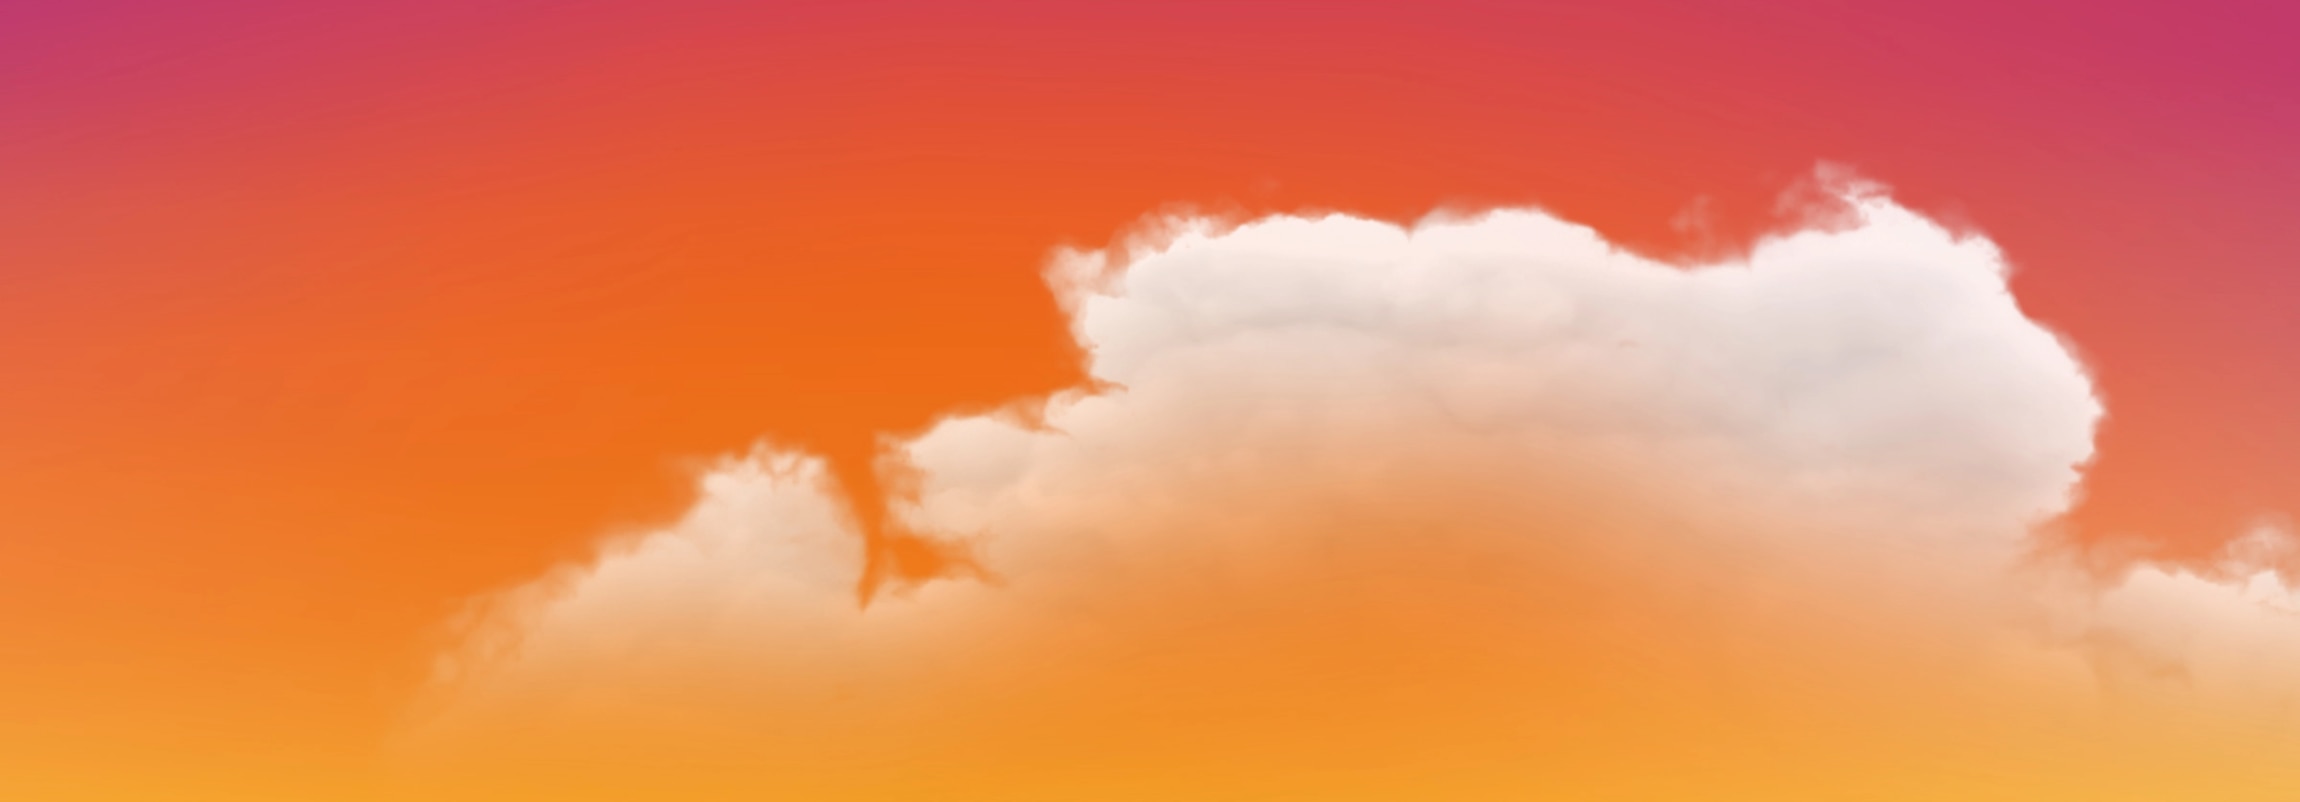 Malibu background with clouds